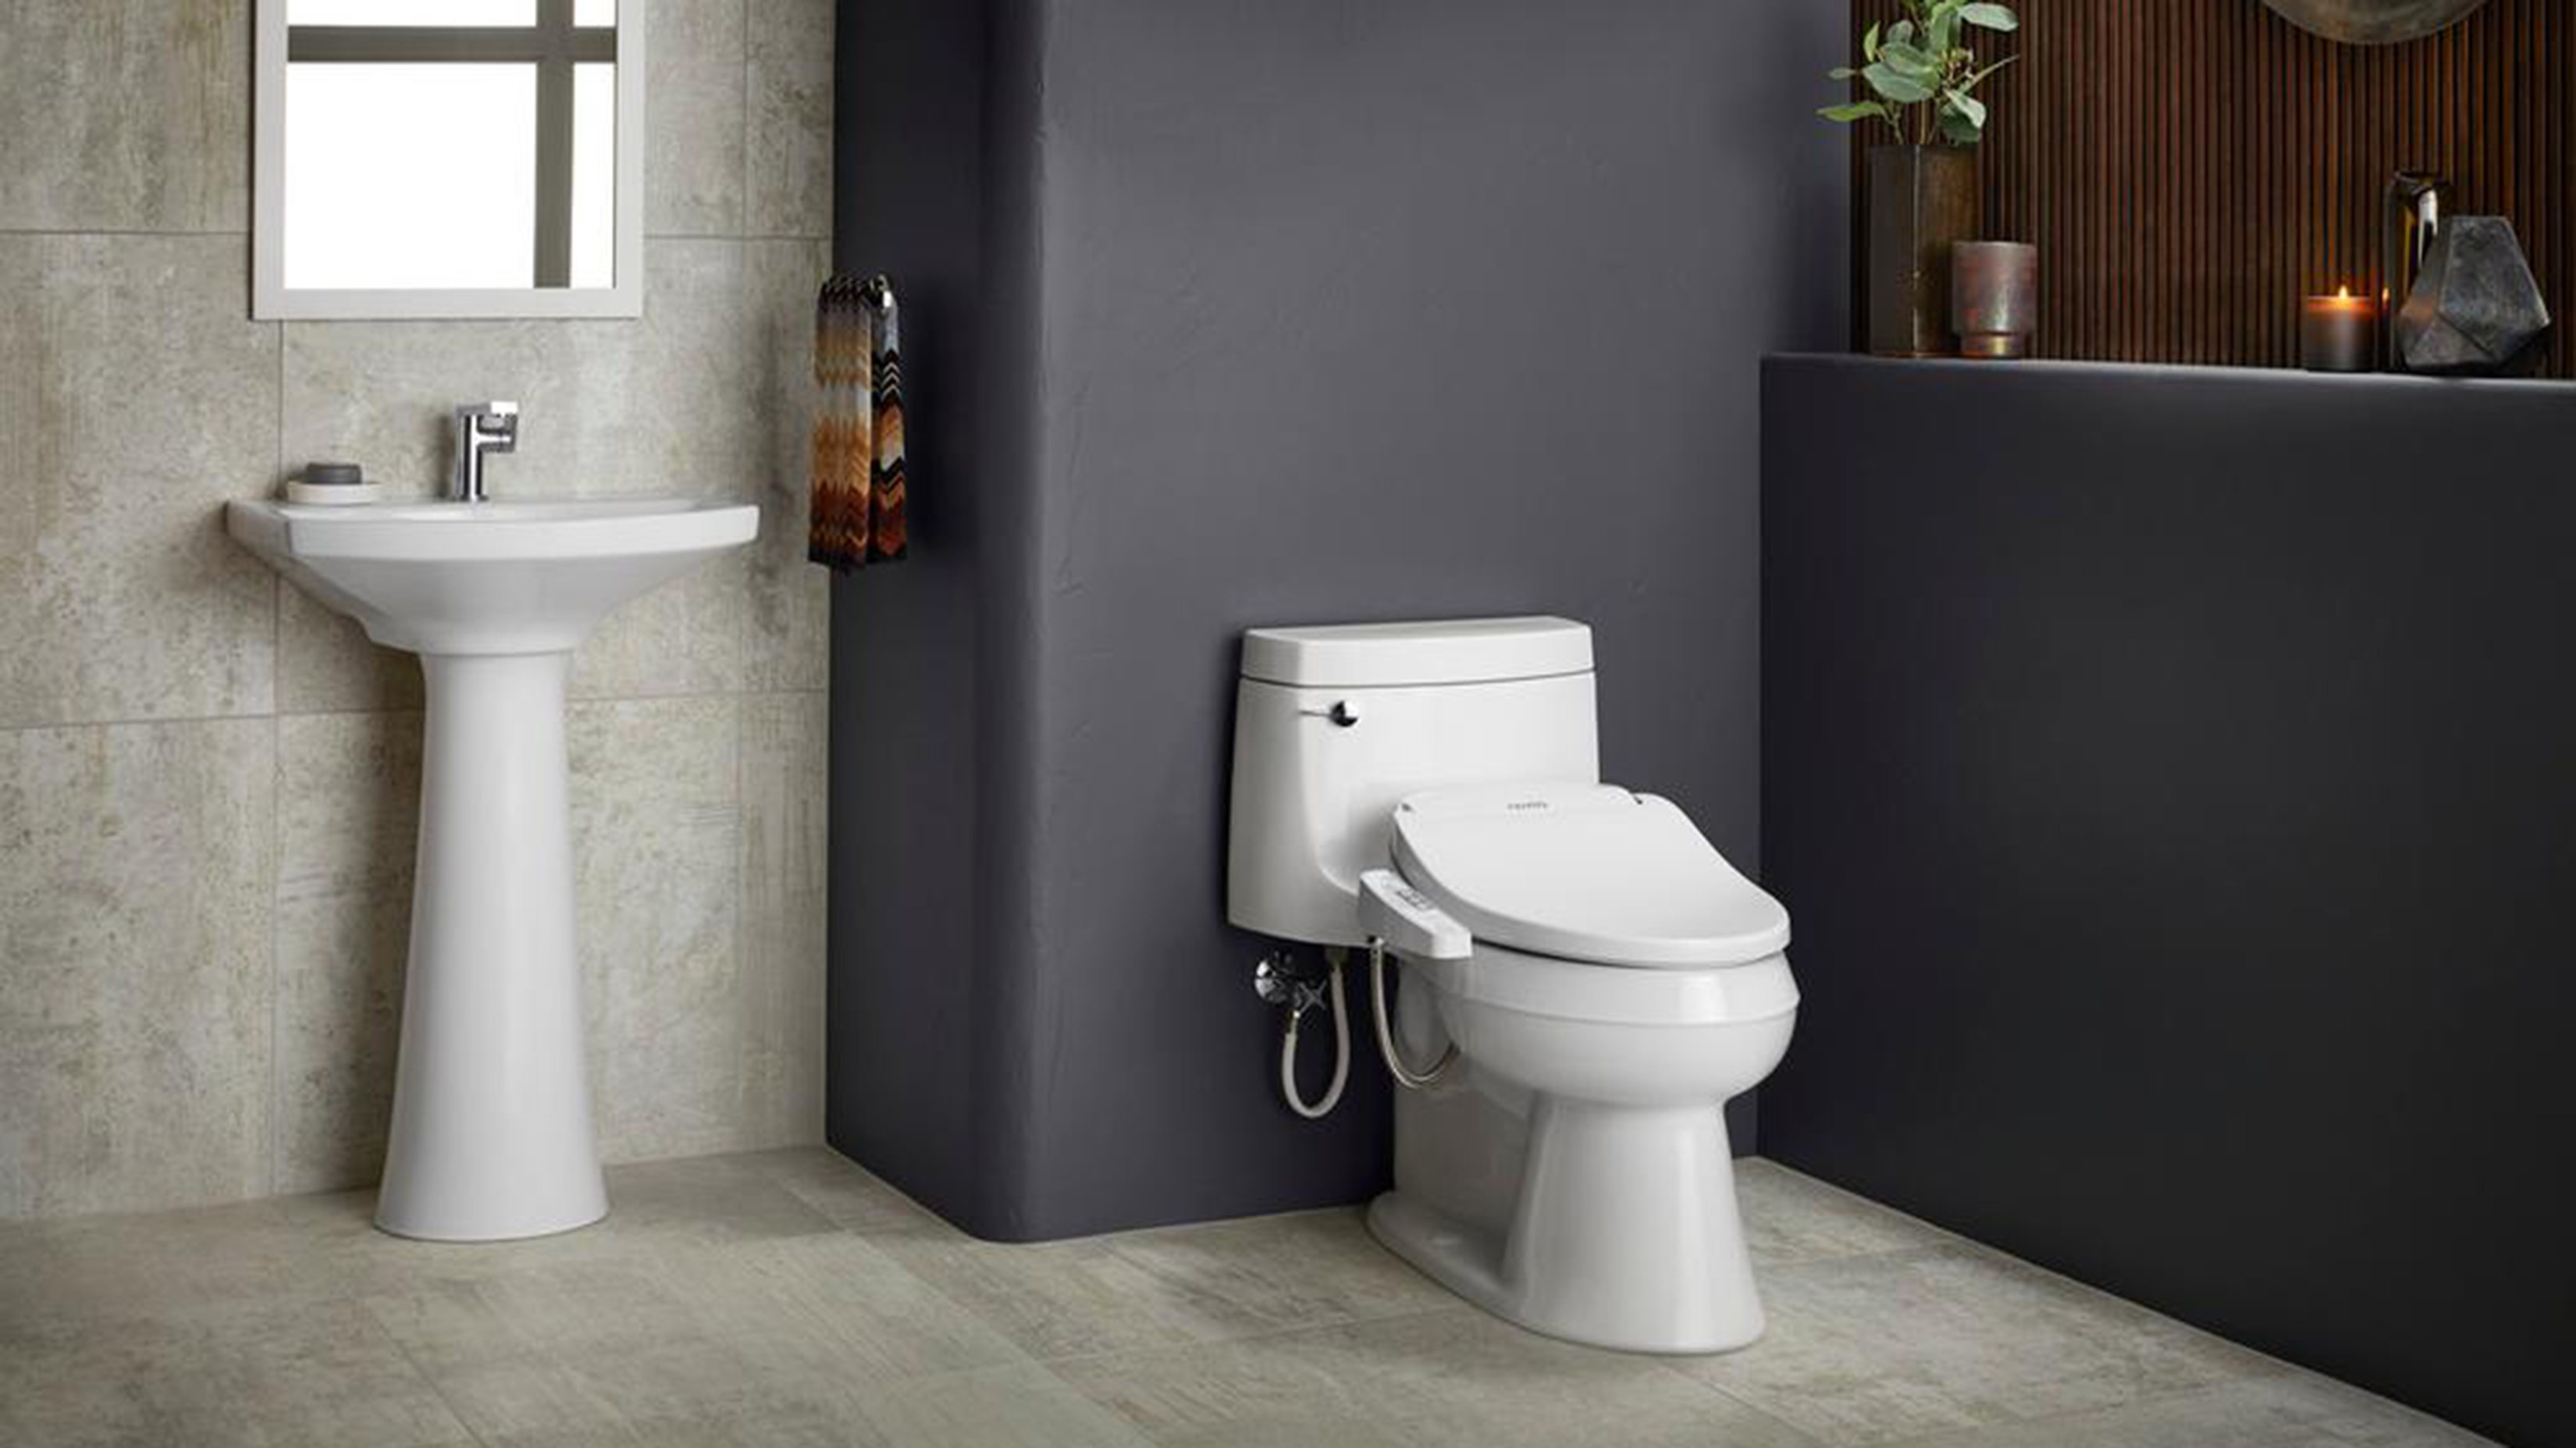 Best Bidet Your Guide To Picking The Right Bidet Toilet Attachment Cnn Underscored